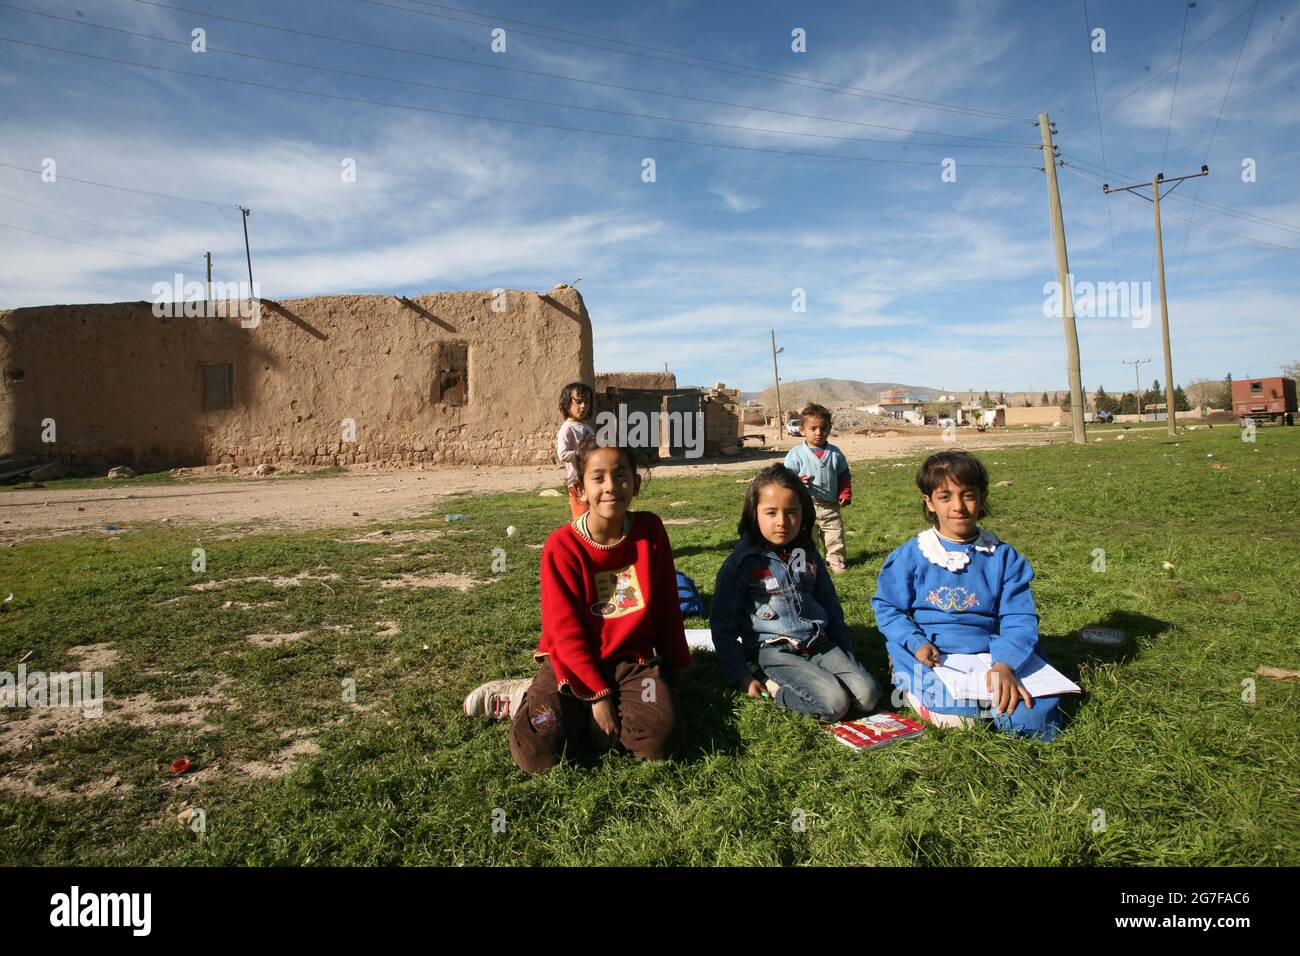 MARDIN, TURKEY - MARCH 22: Turkish scholl girls at Kiziltepe District on March 22, 2010 in Mardin, Turkey. Stock Photo